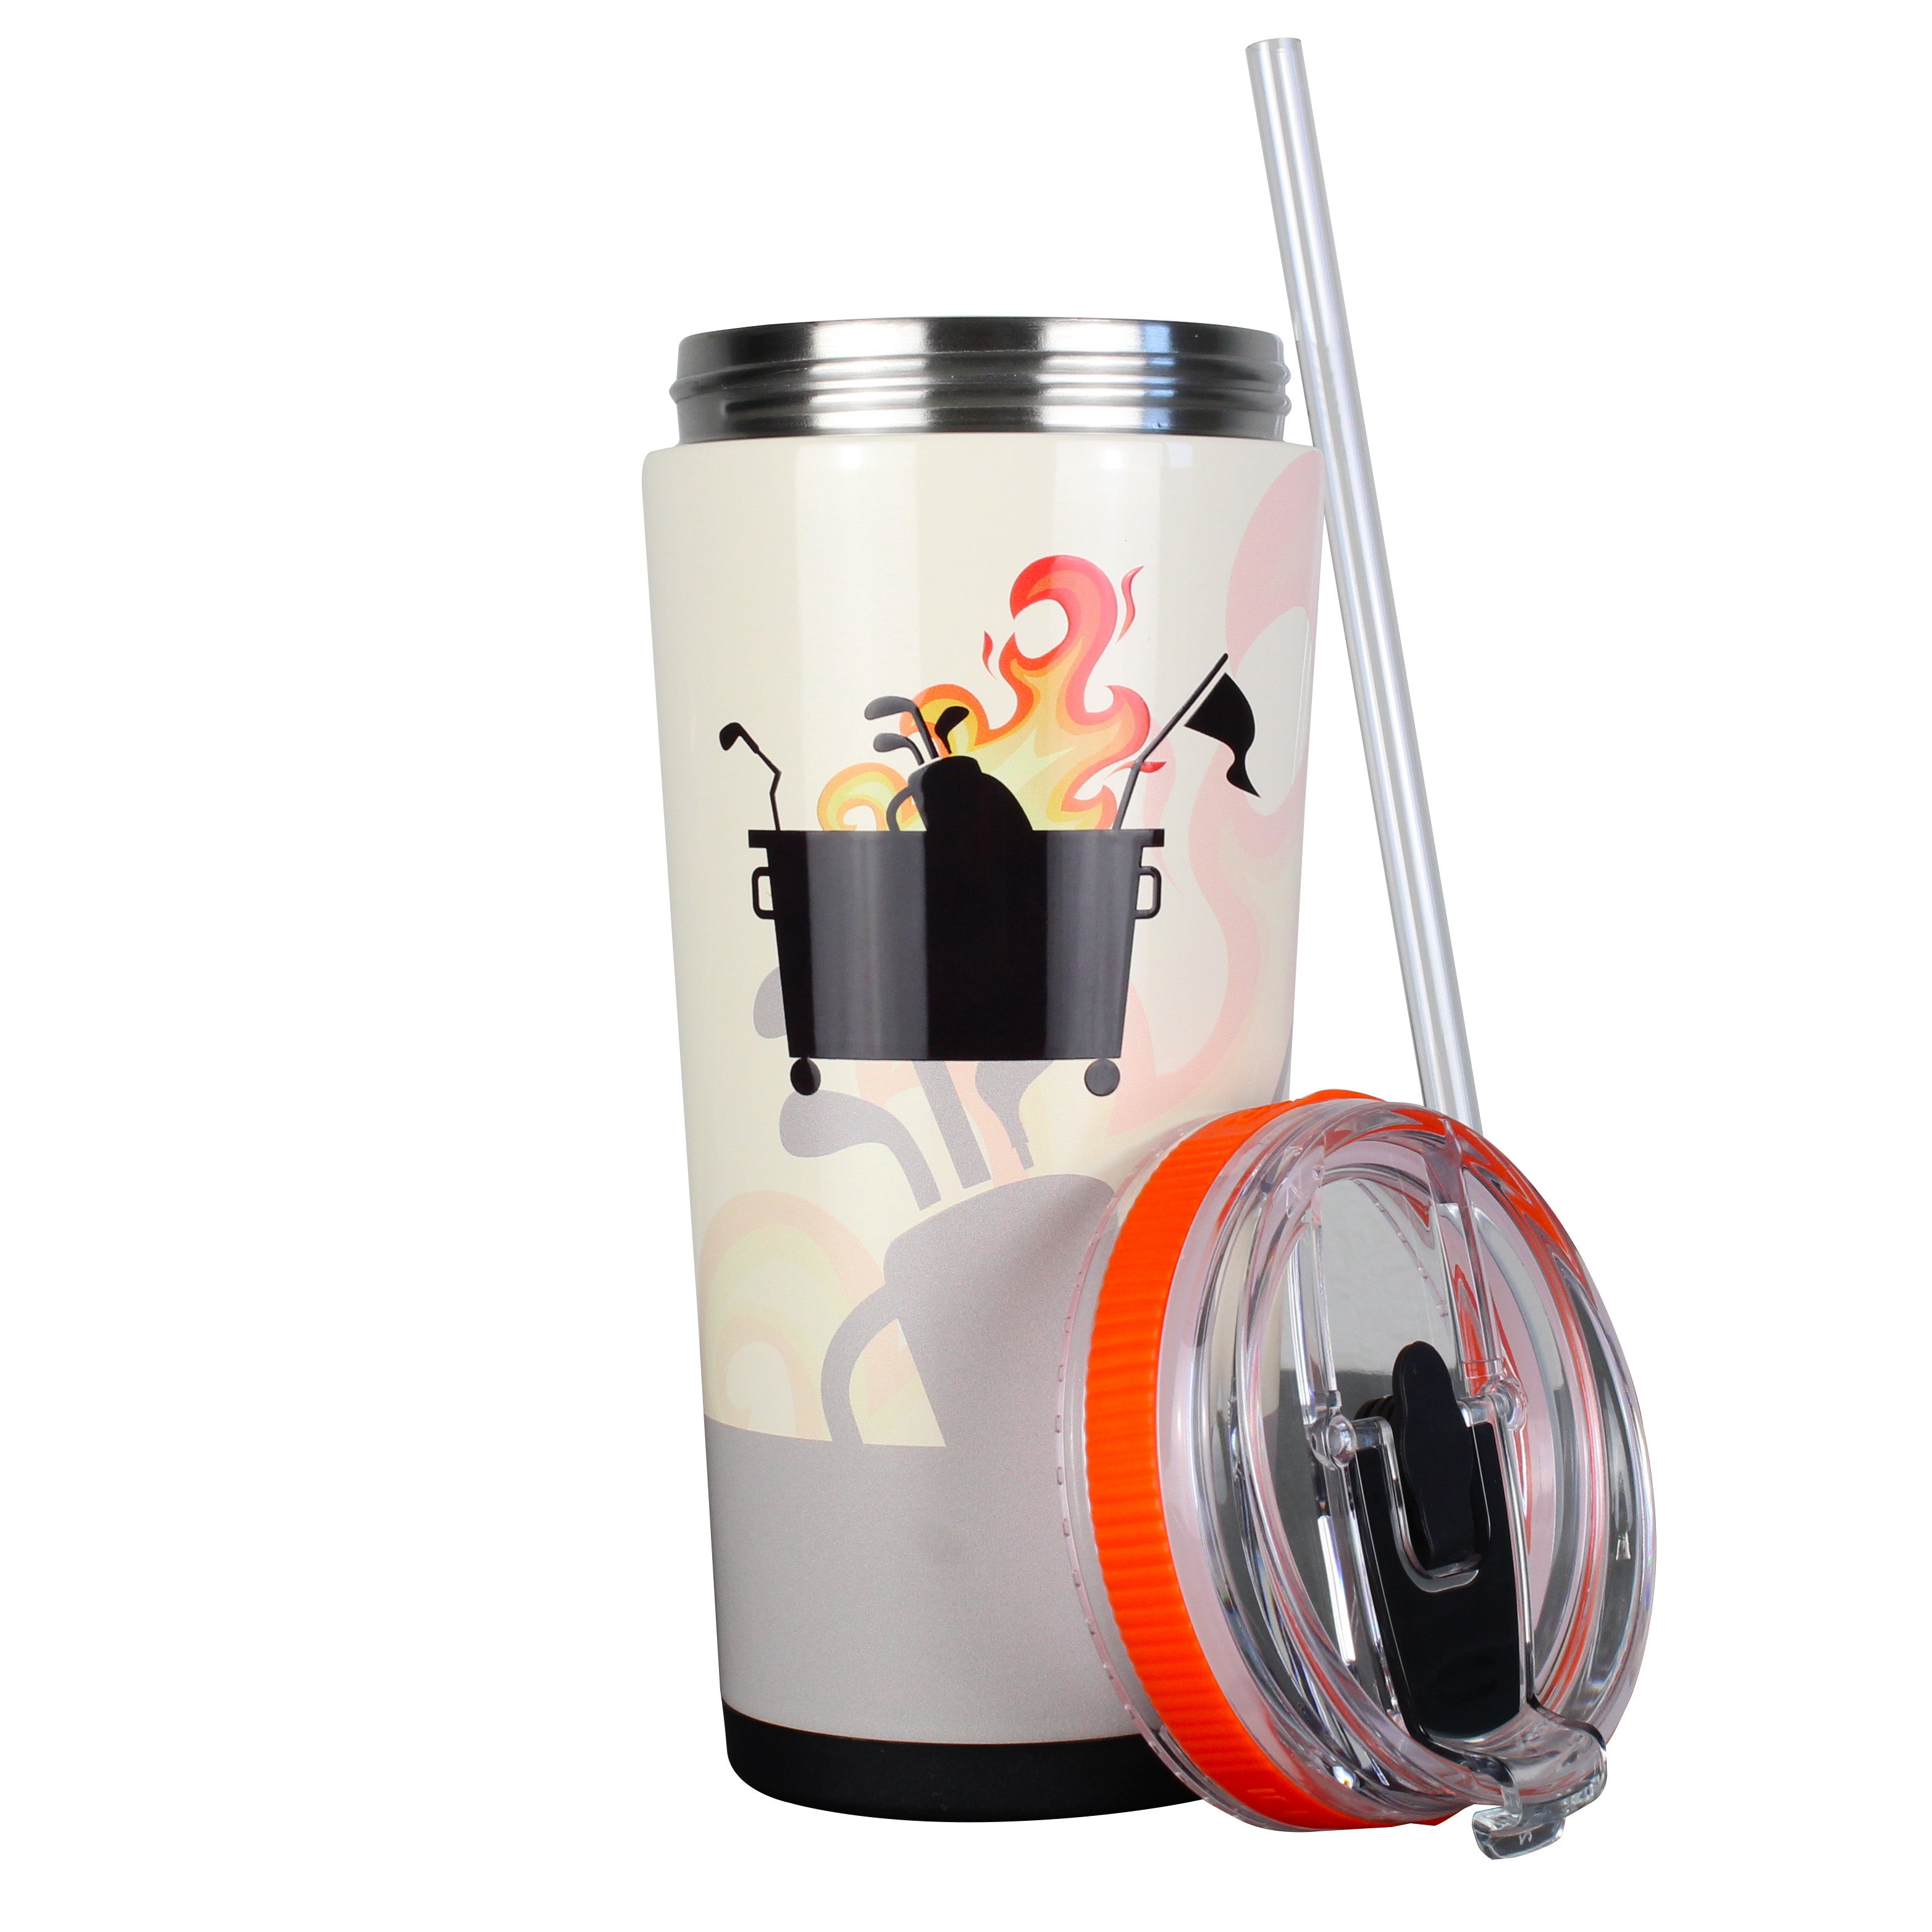 26oz Golf Series Ice Shaker Insulated Bottle - Dumpster Fire